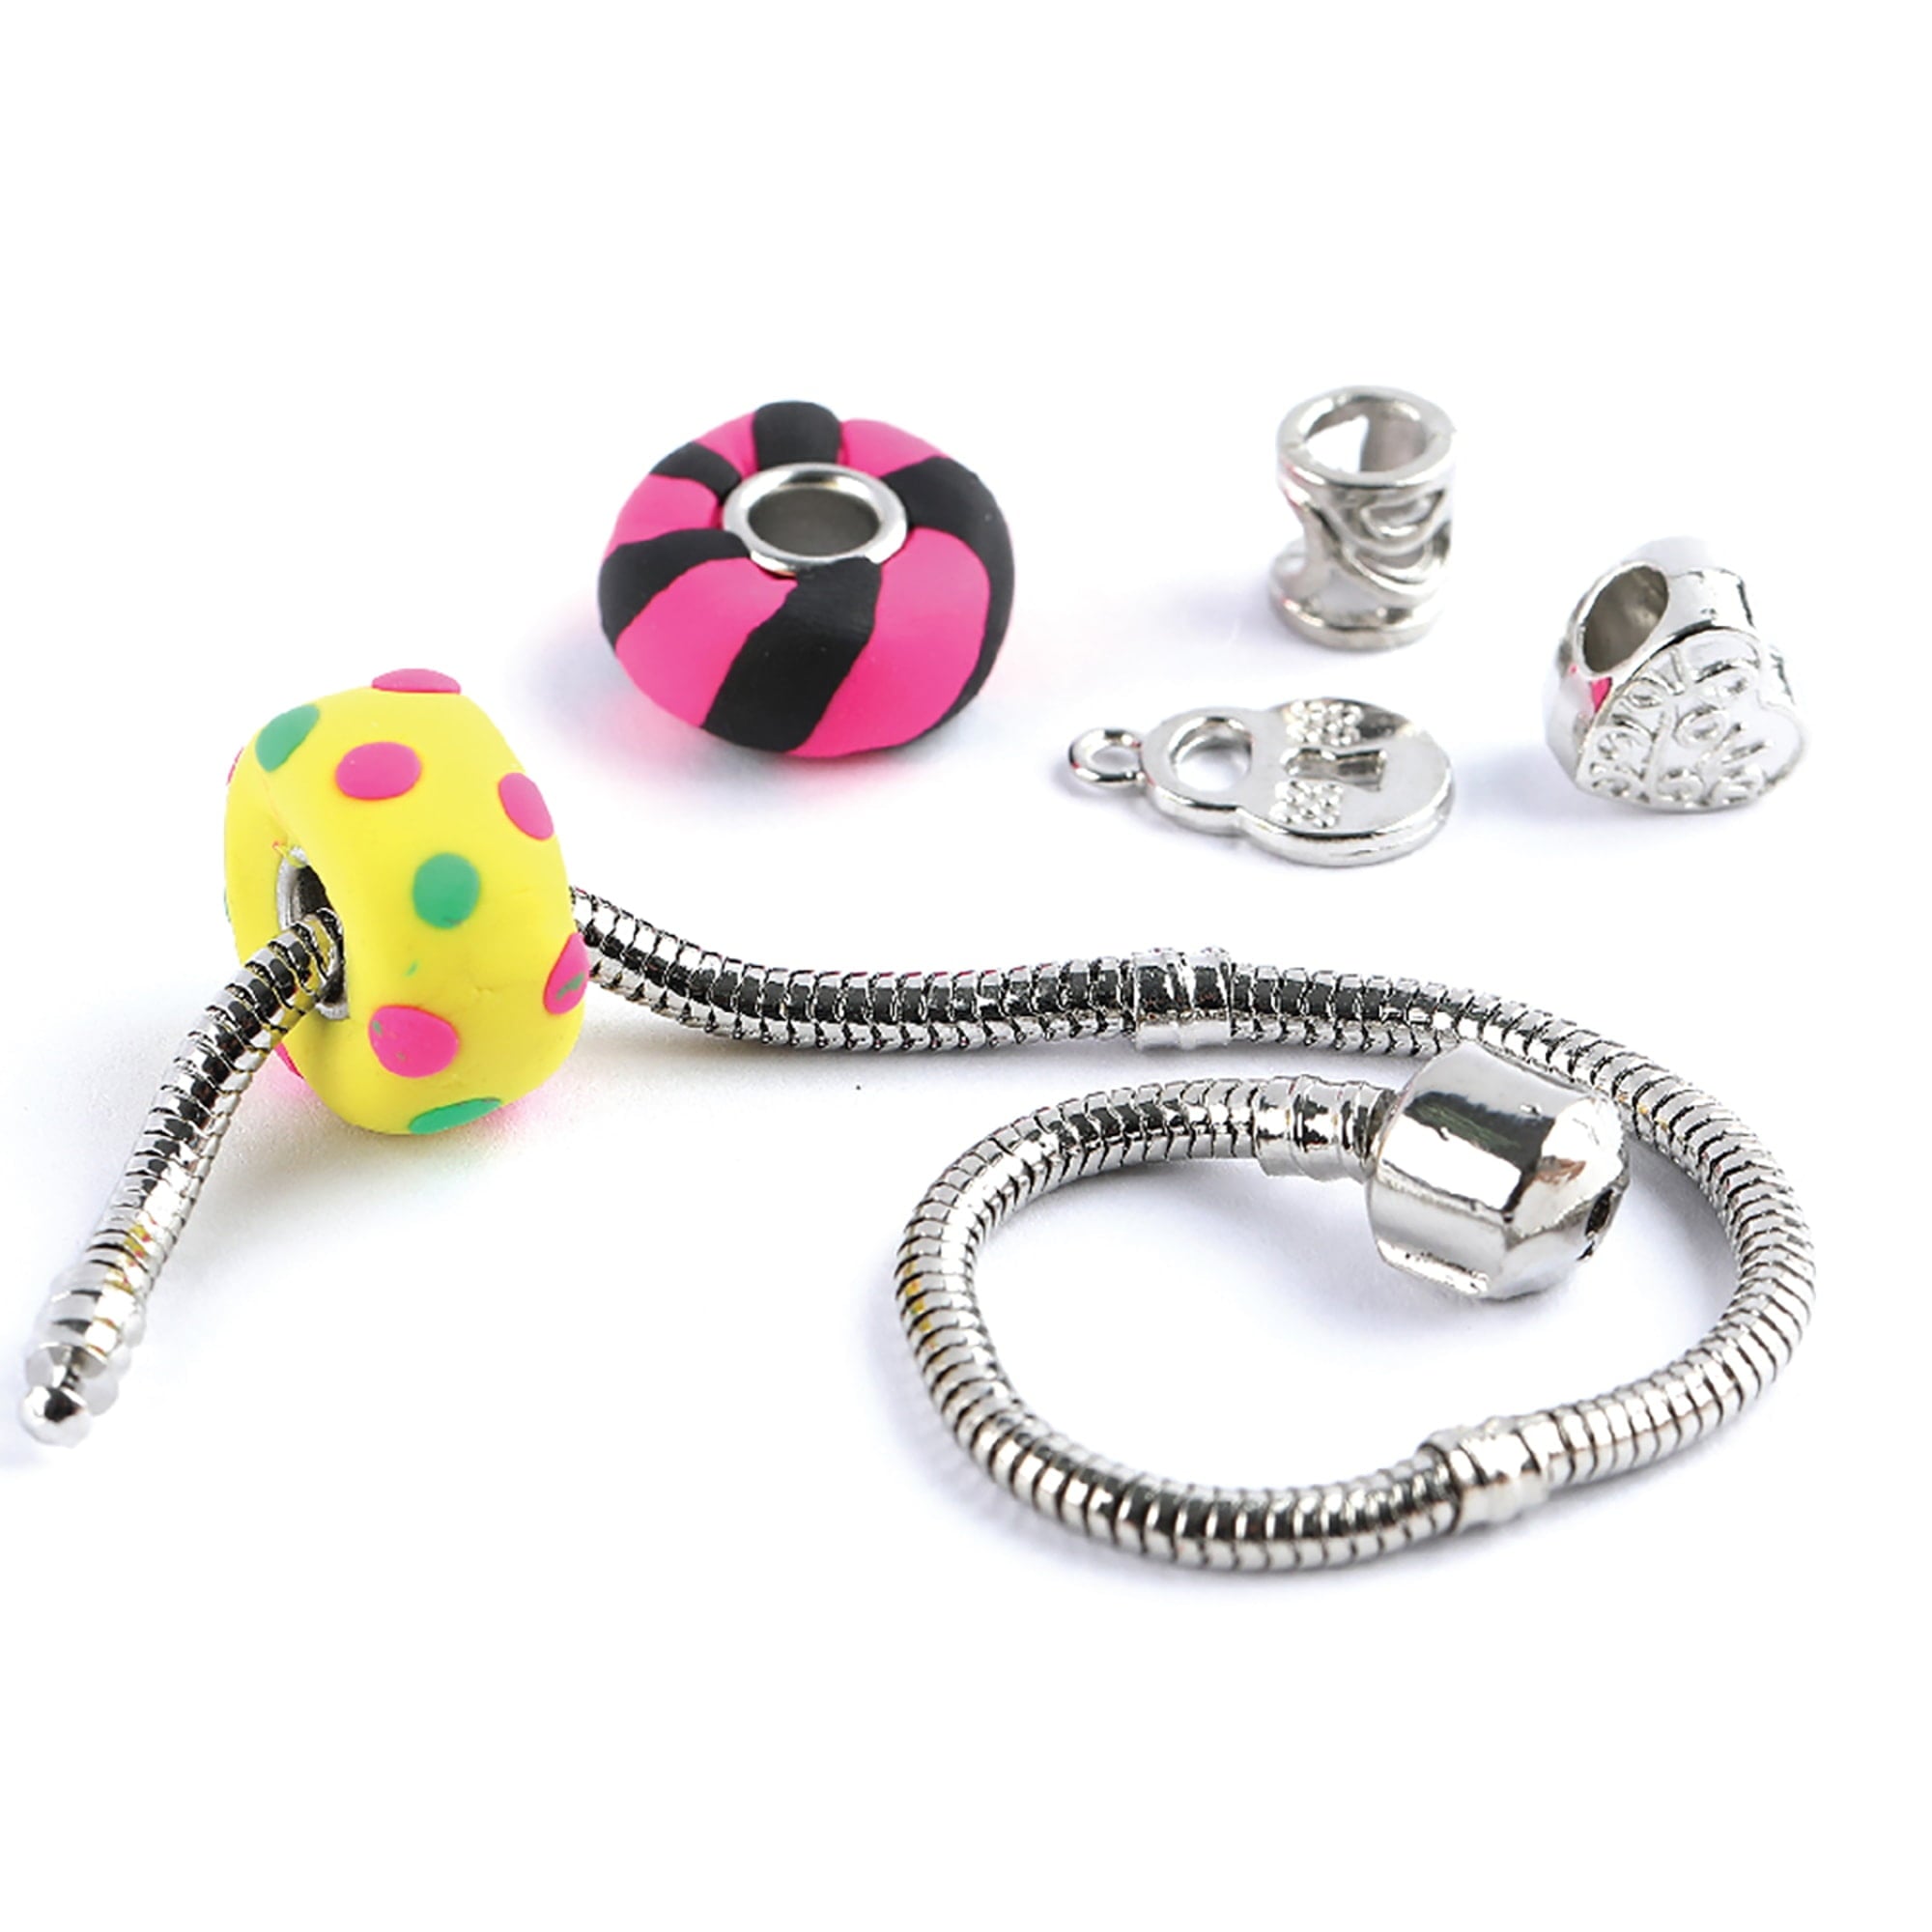 Amav Fashion Time Cool Charm Bracelets Kit, 6 Pack